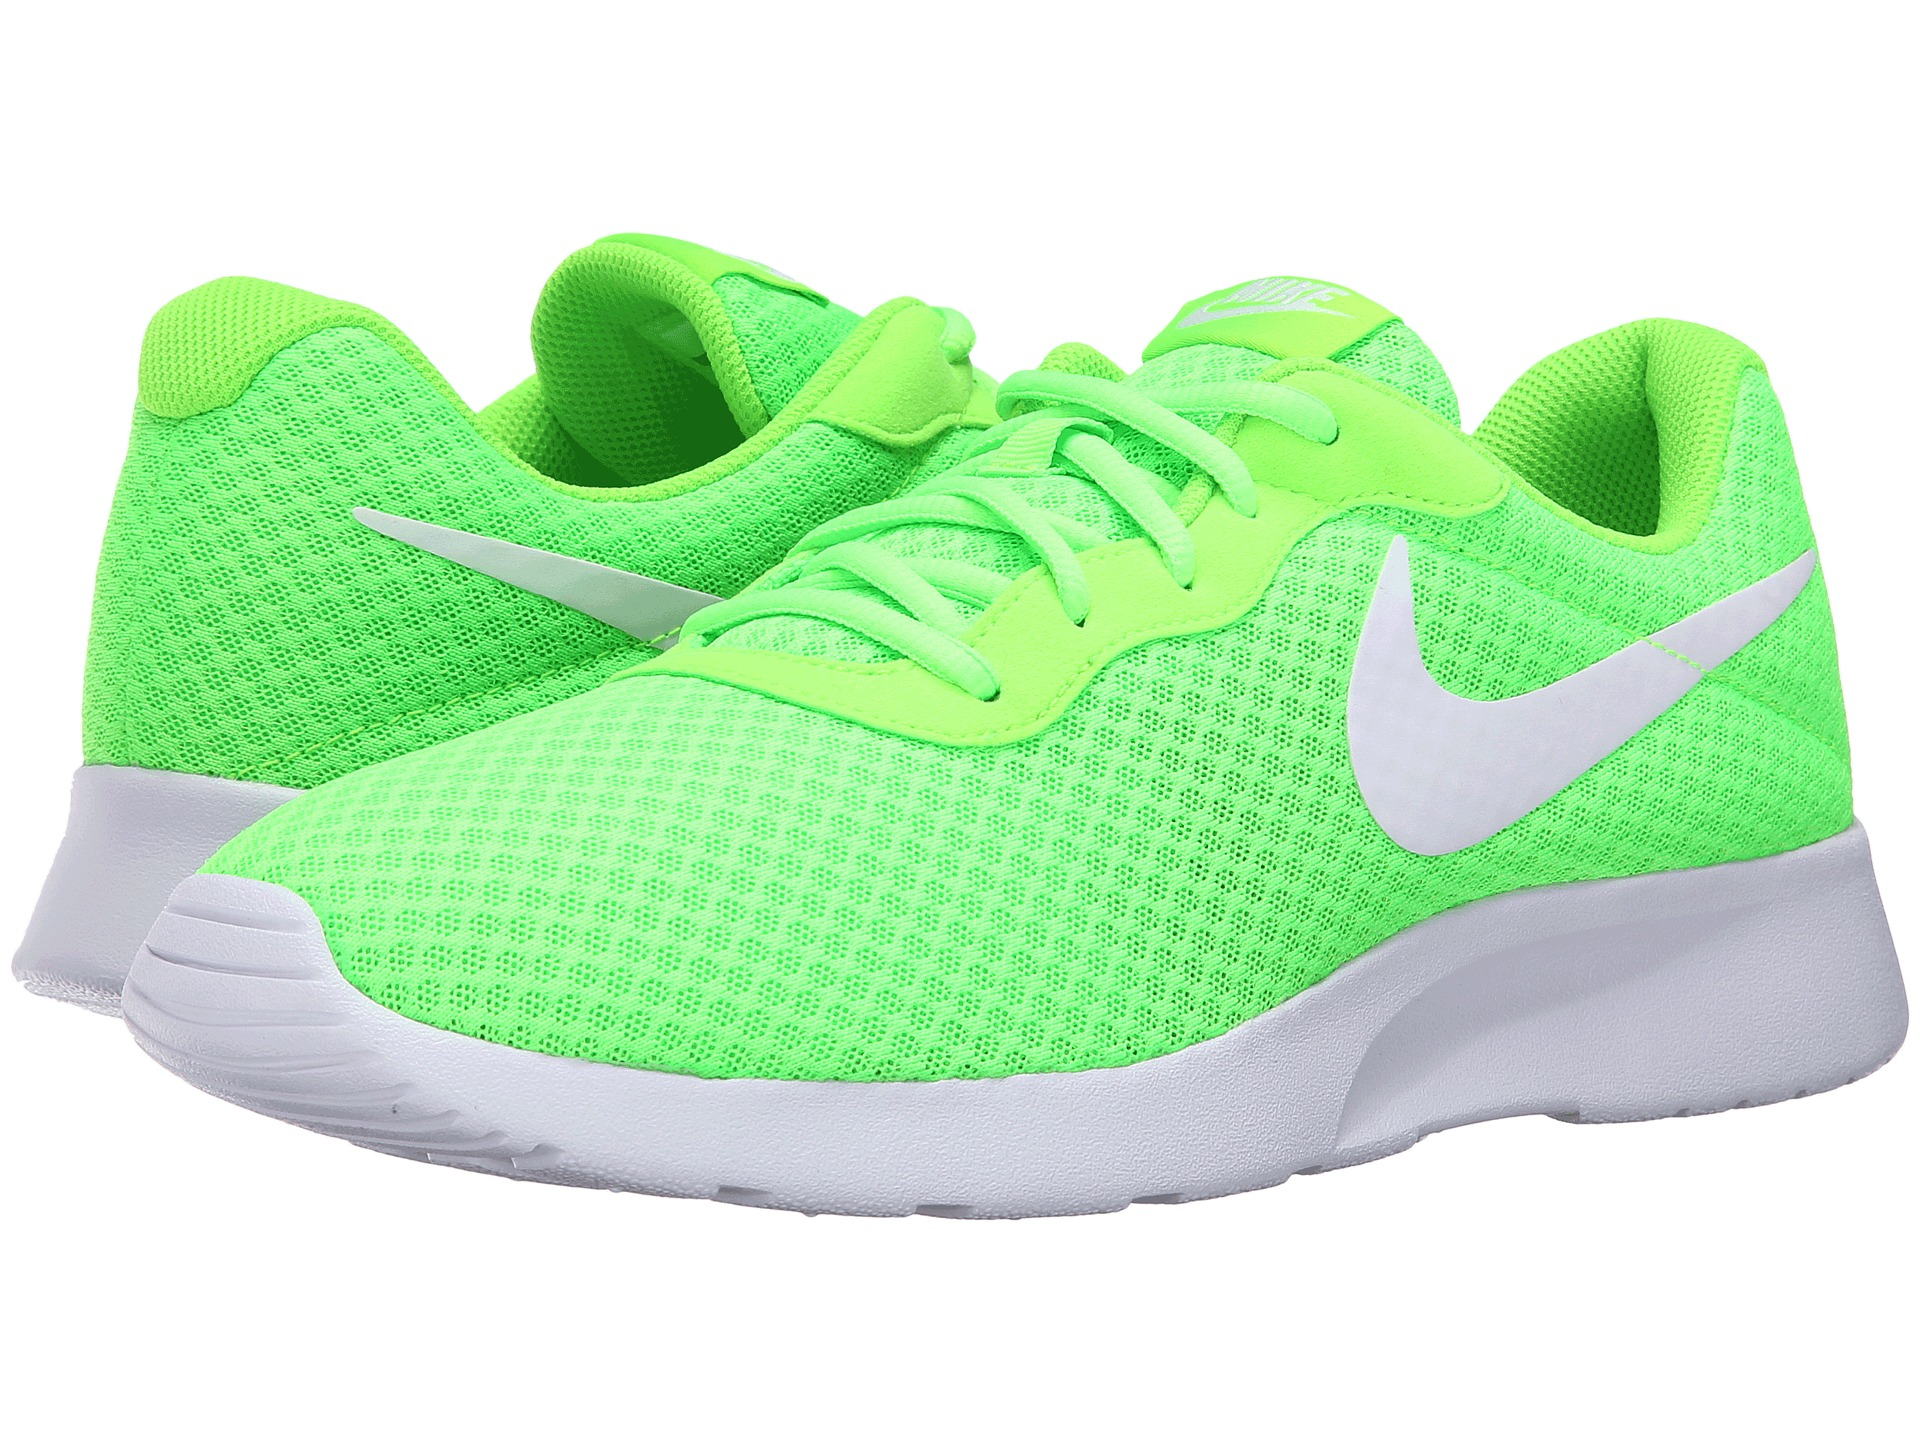 Lyst - Nike Tanjun in Green for Men